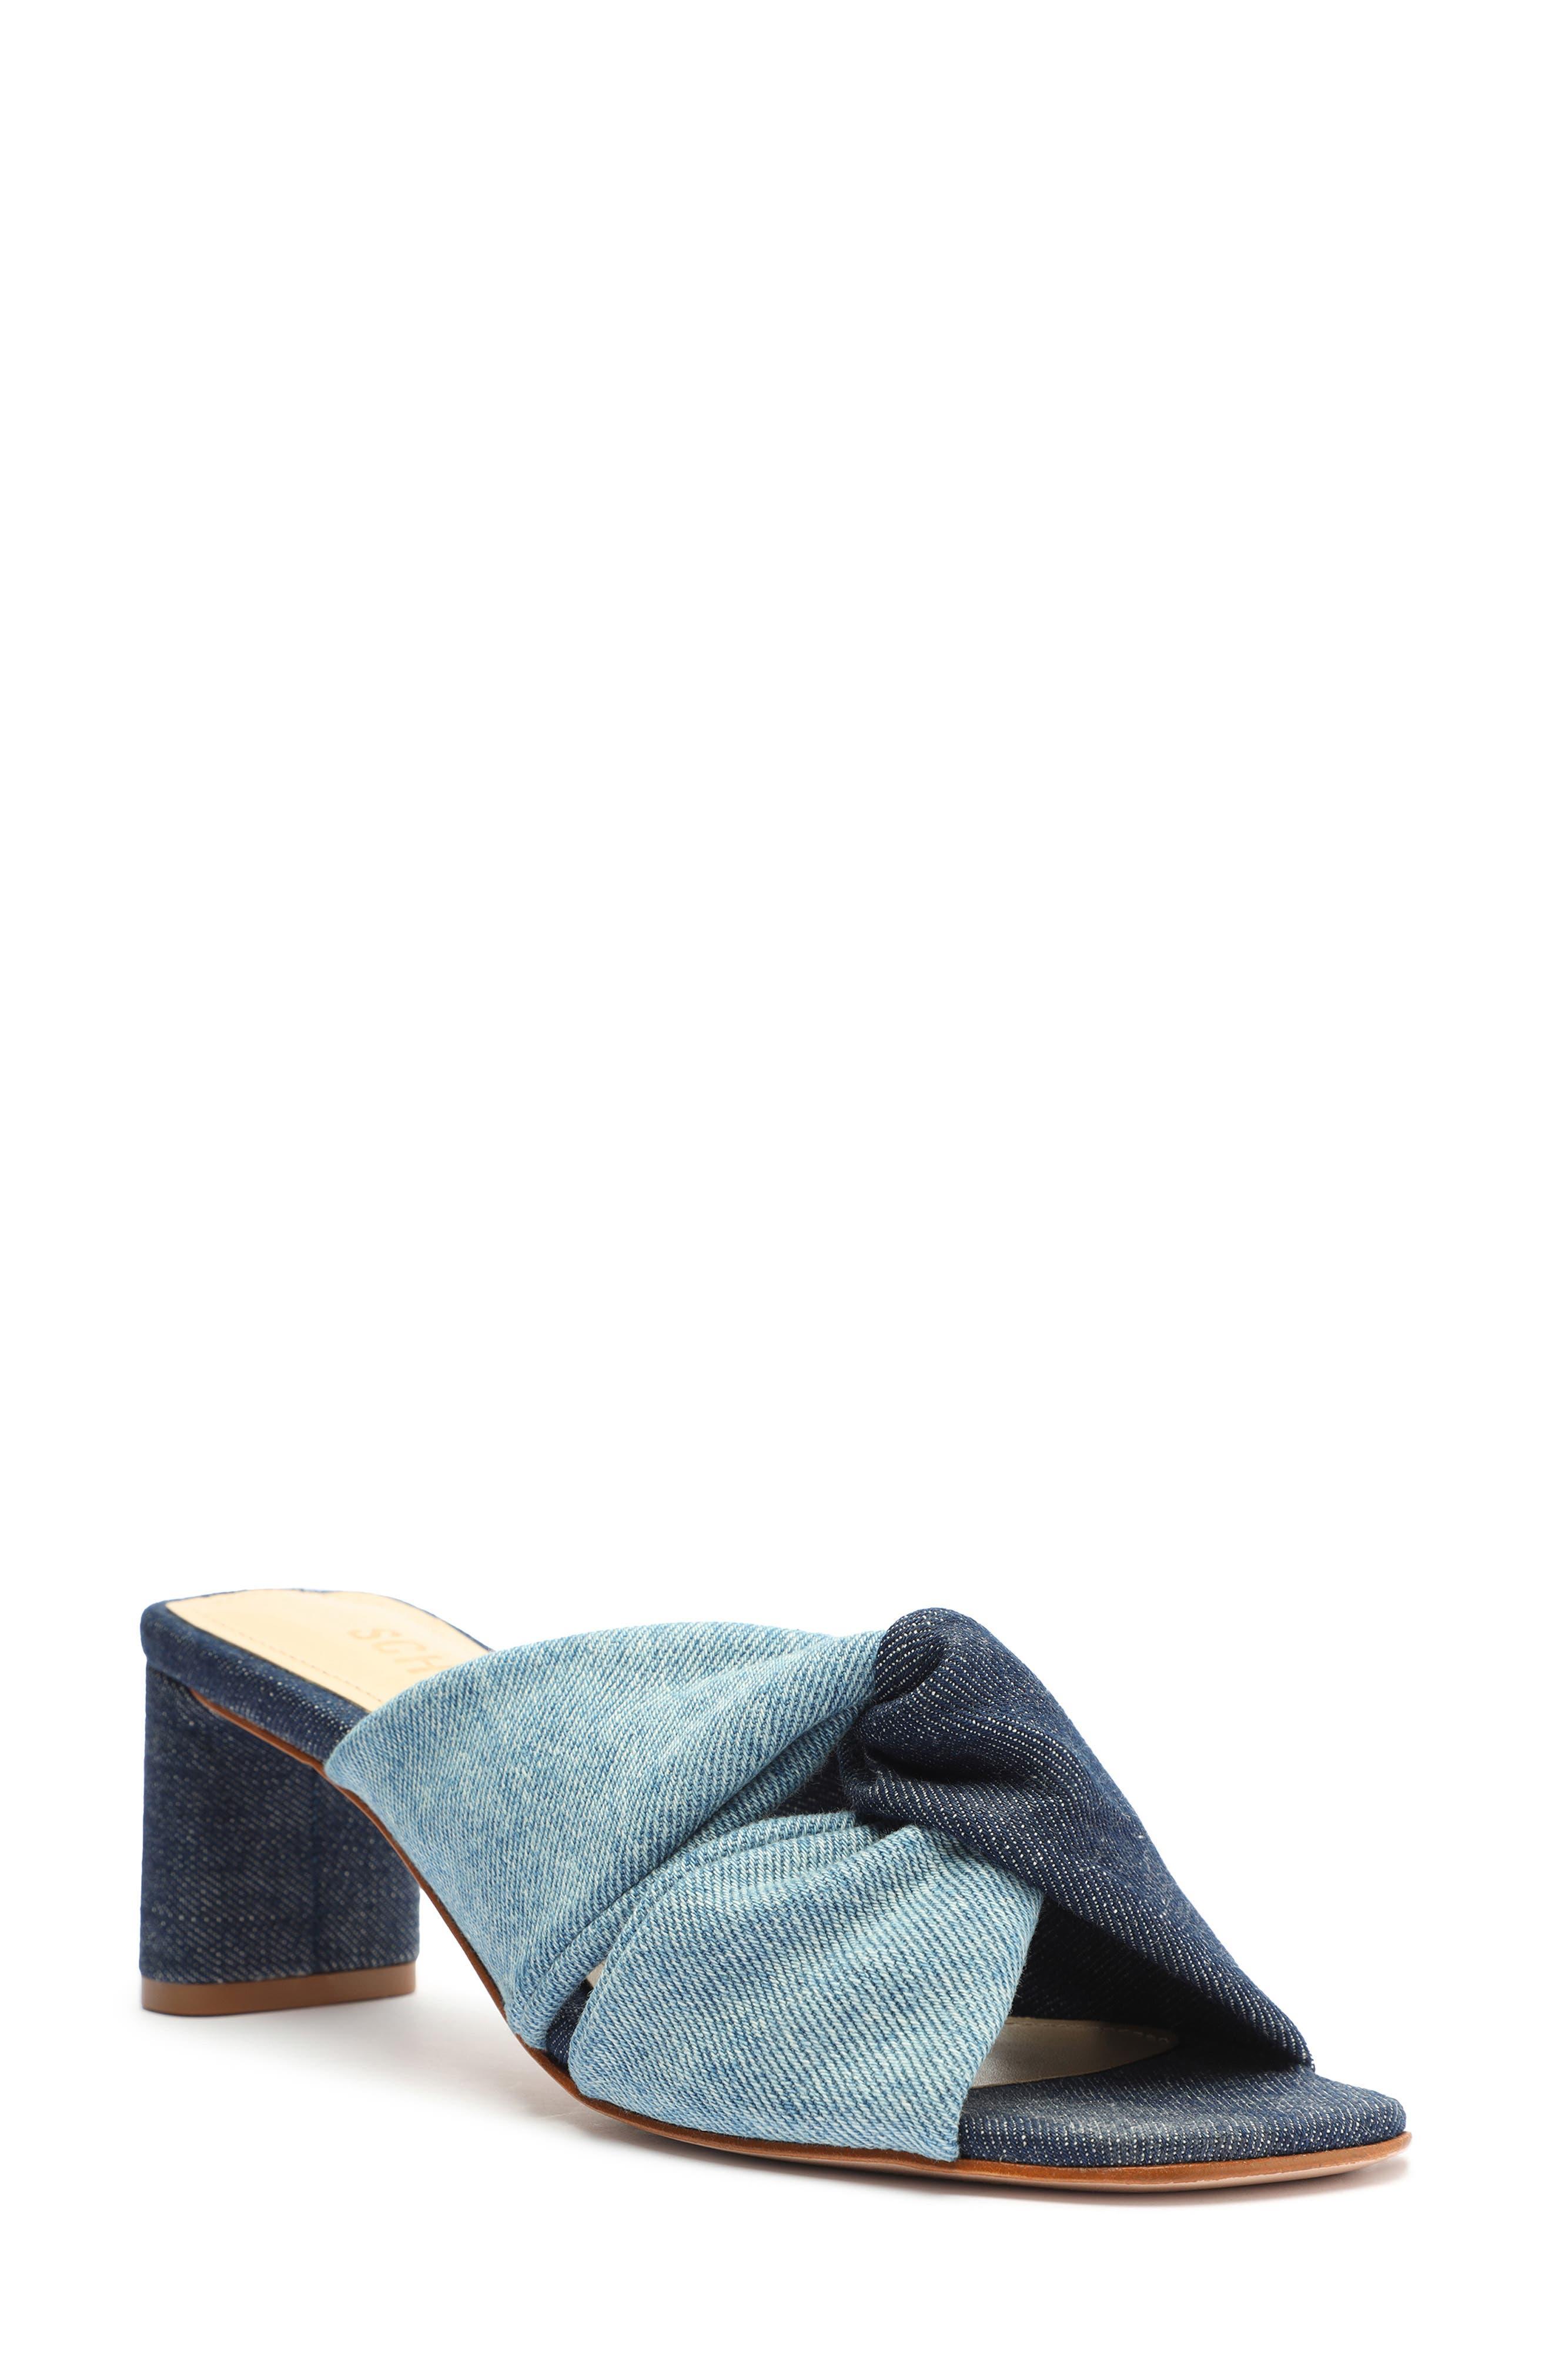 SCHUTZ SHOES Wendy Block Heel Slide Sandal in Blue | Lyst